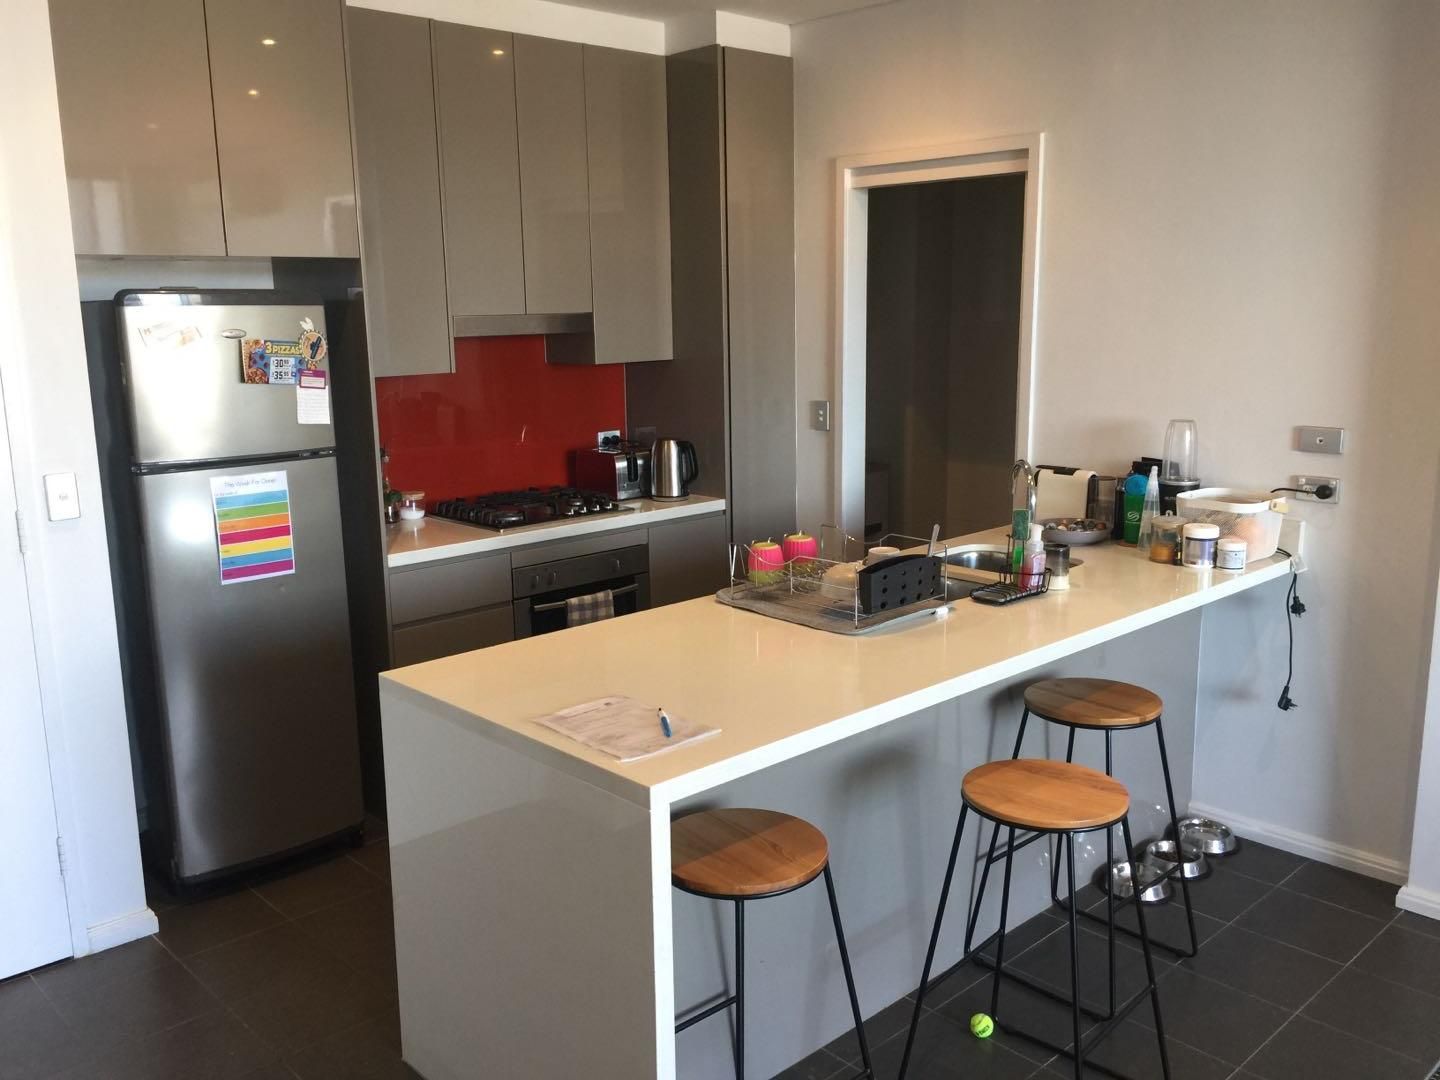 2 bedrooms Apartment / Unit / Flat in 735/3 loftus st ARNCLIFFE NSW, 2205